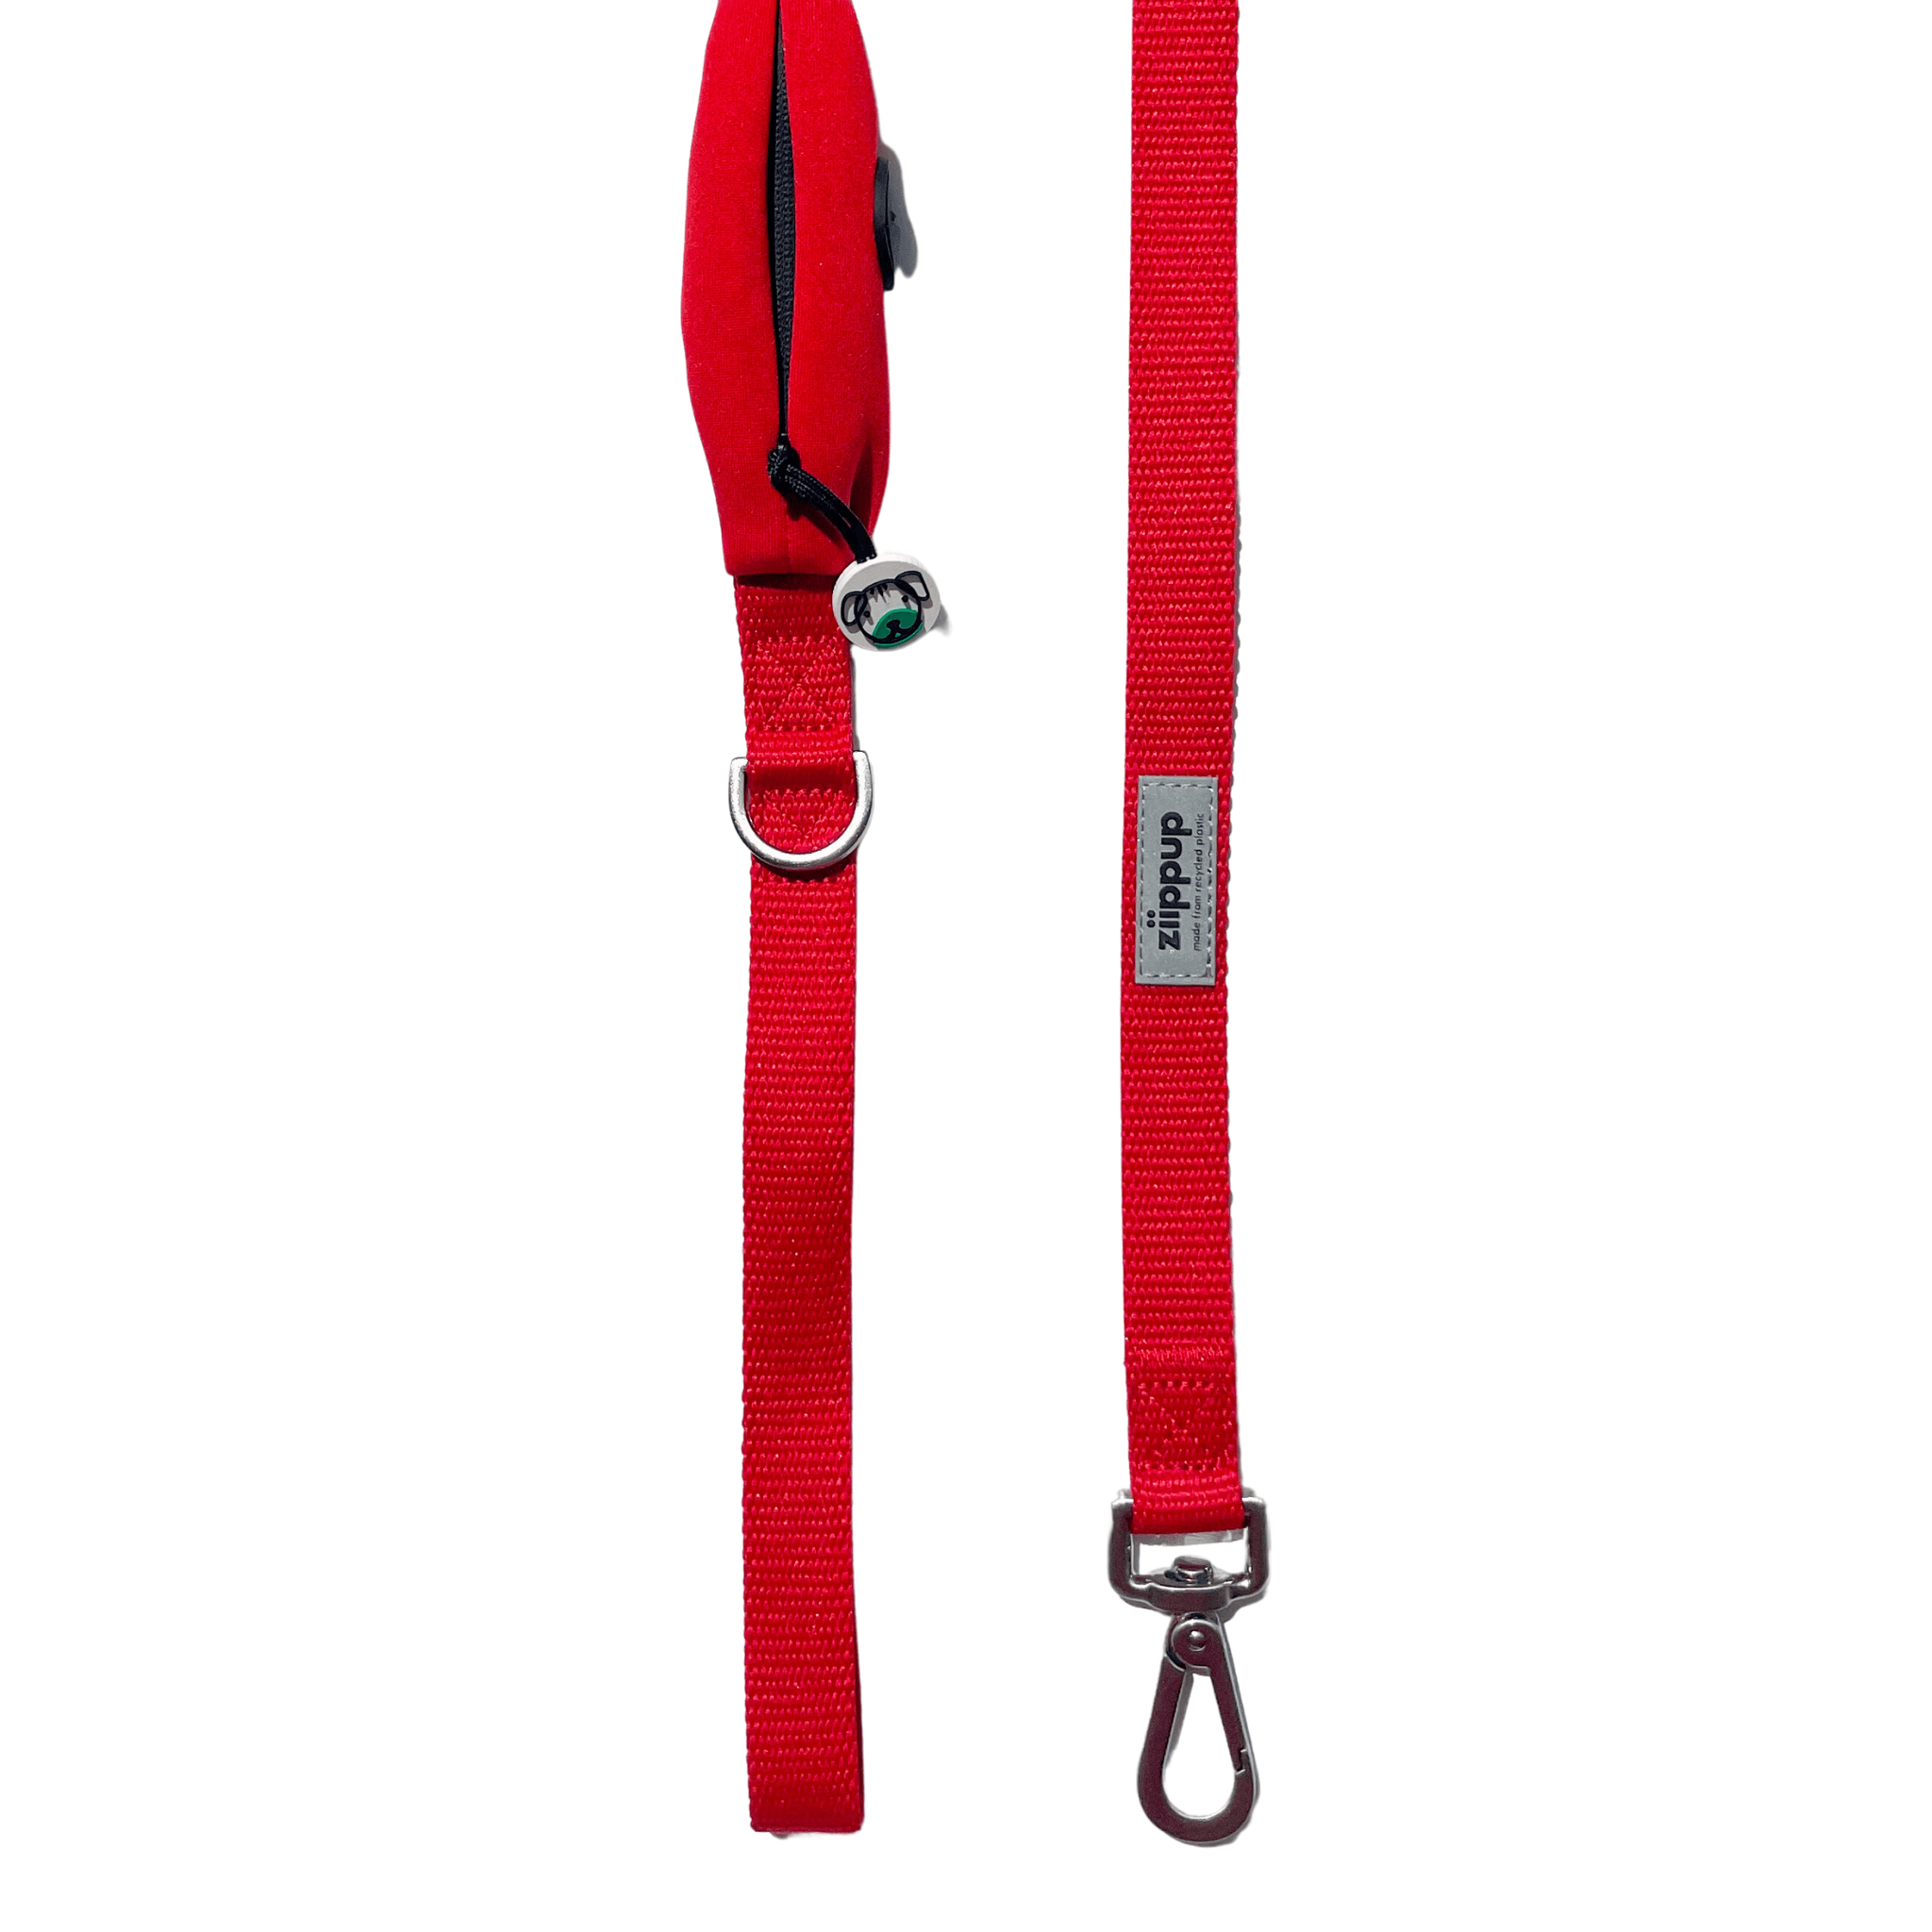 Closeup of Ziippup red dog leash